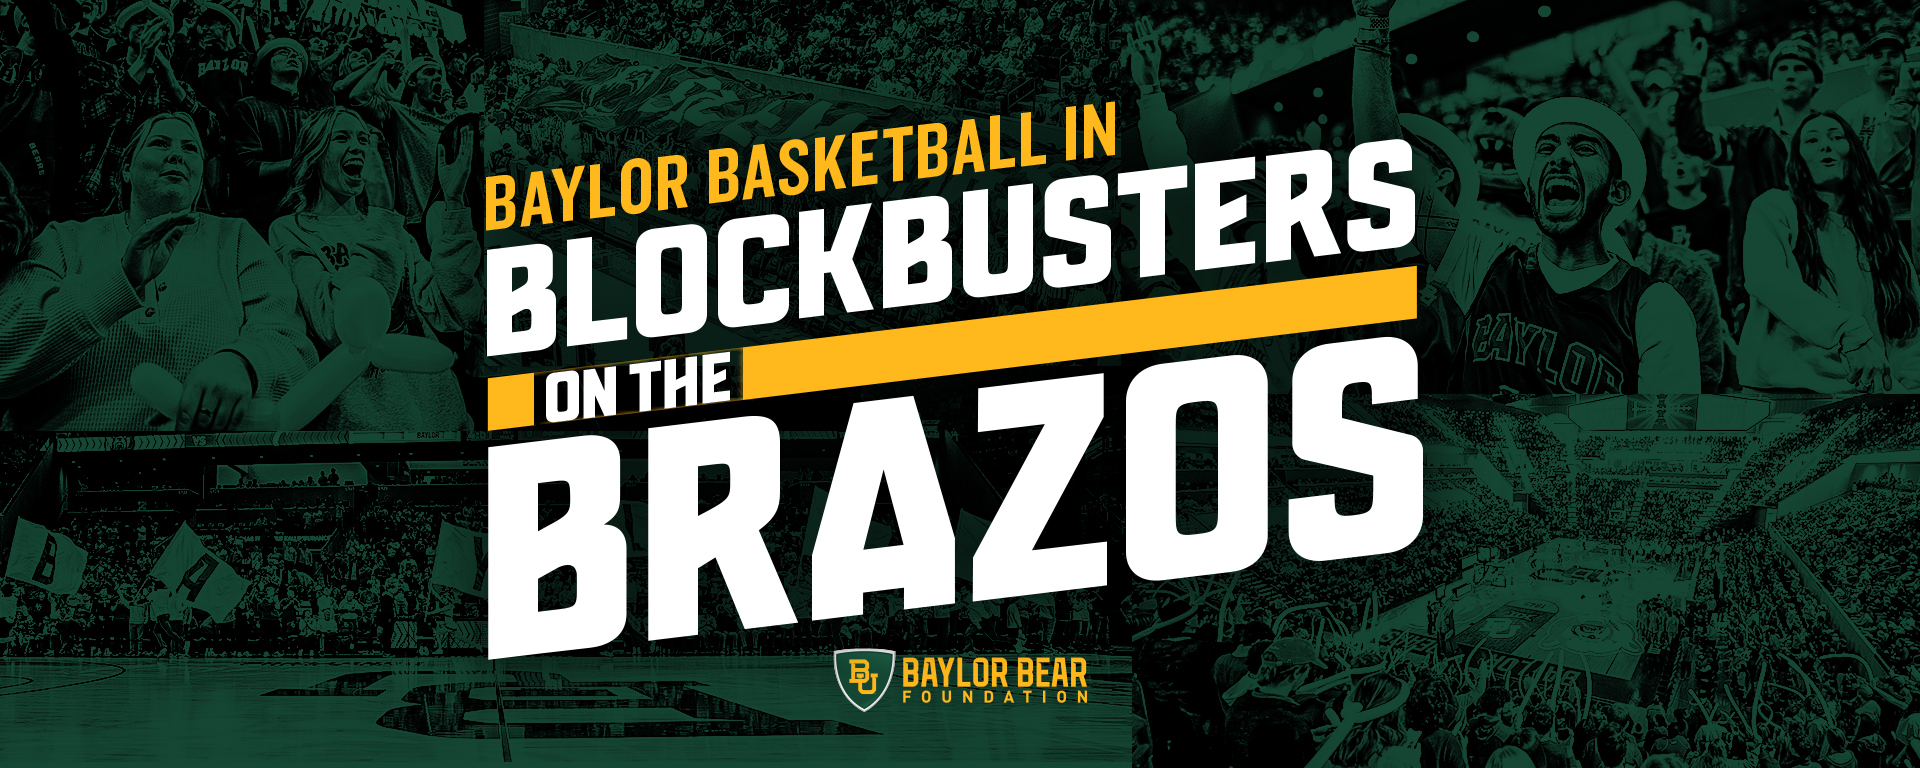 Renew your Baylor Basketball season tickets